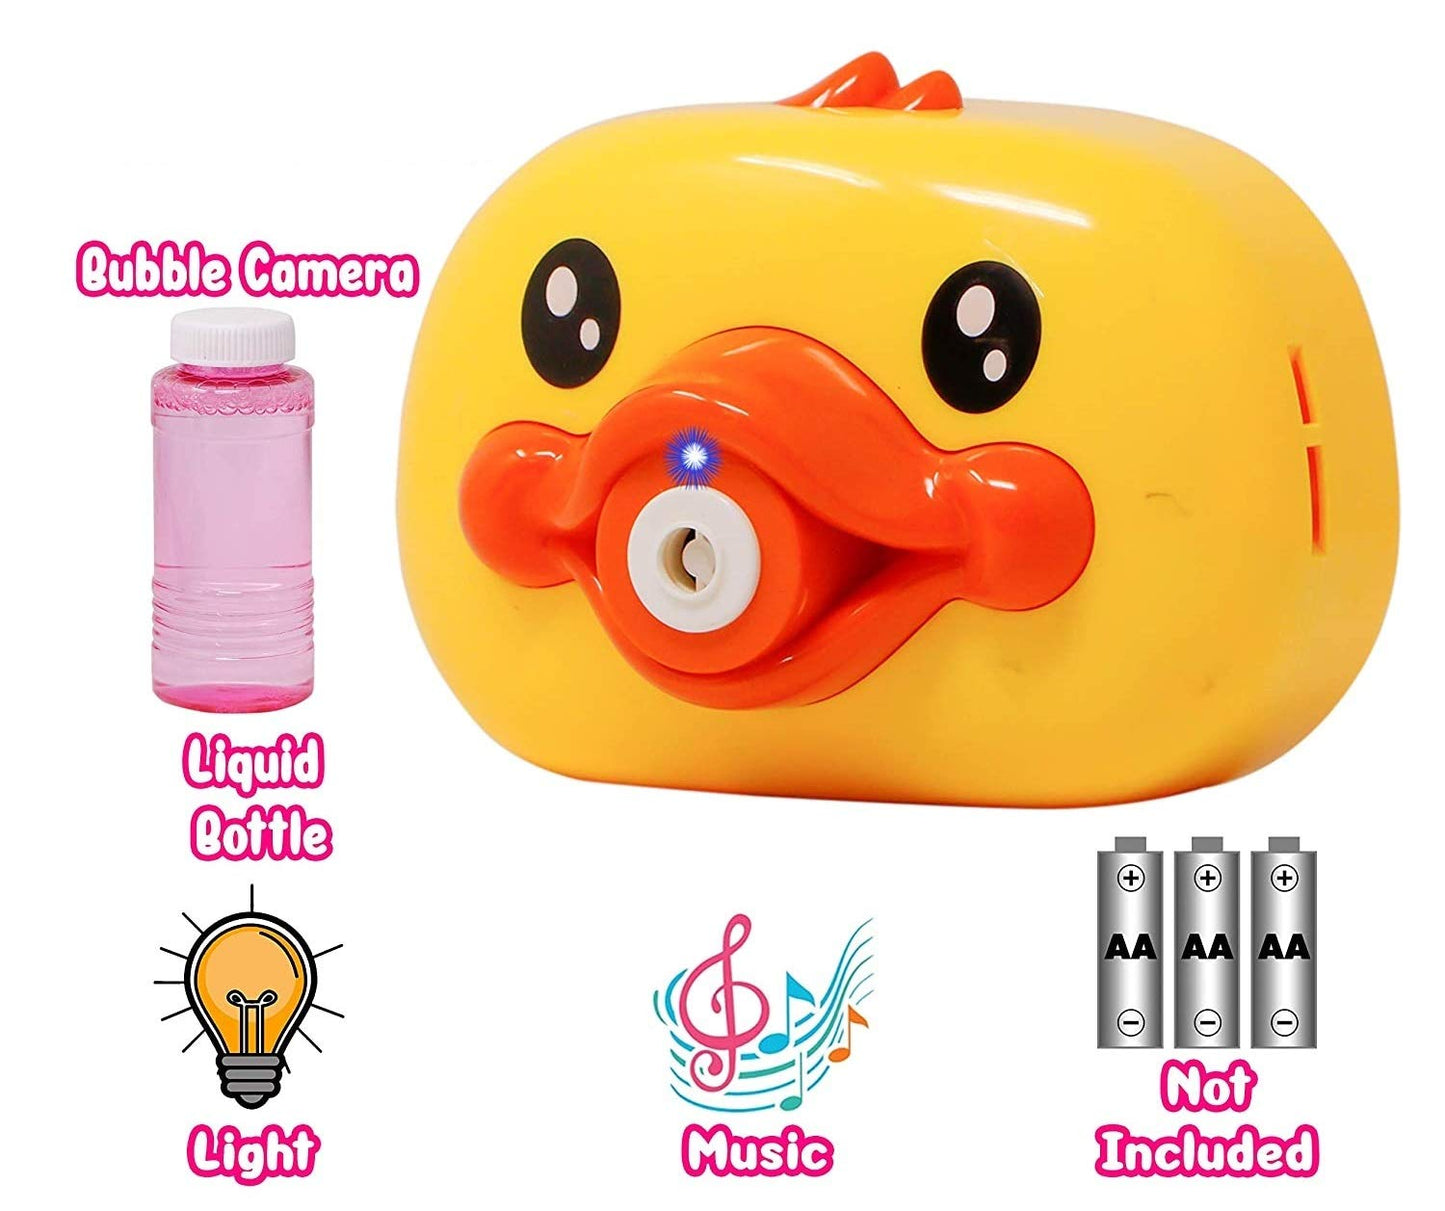 Bubble Camera Series, Bubble Machine Toy For Kids, Bubble Maker Machine Camera Shape With Music And Light